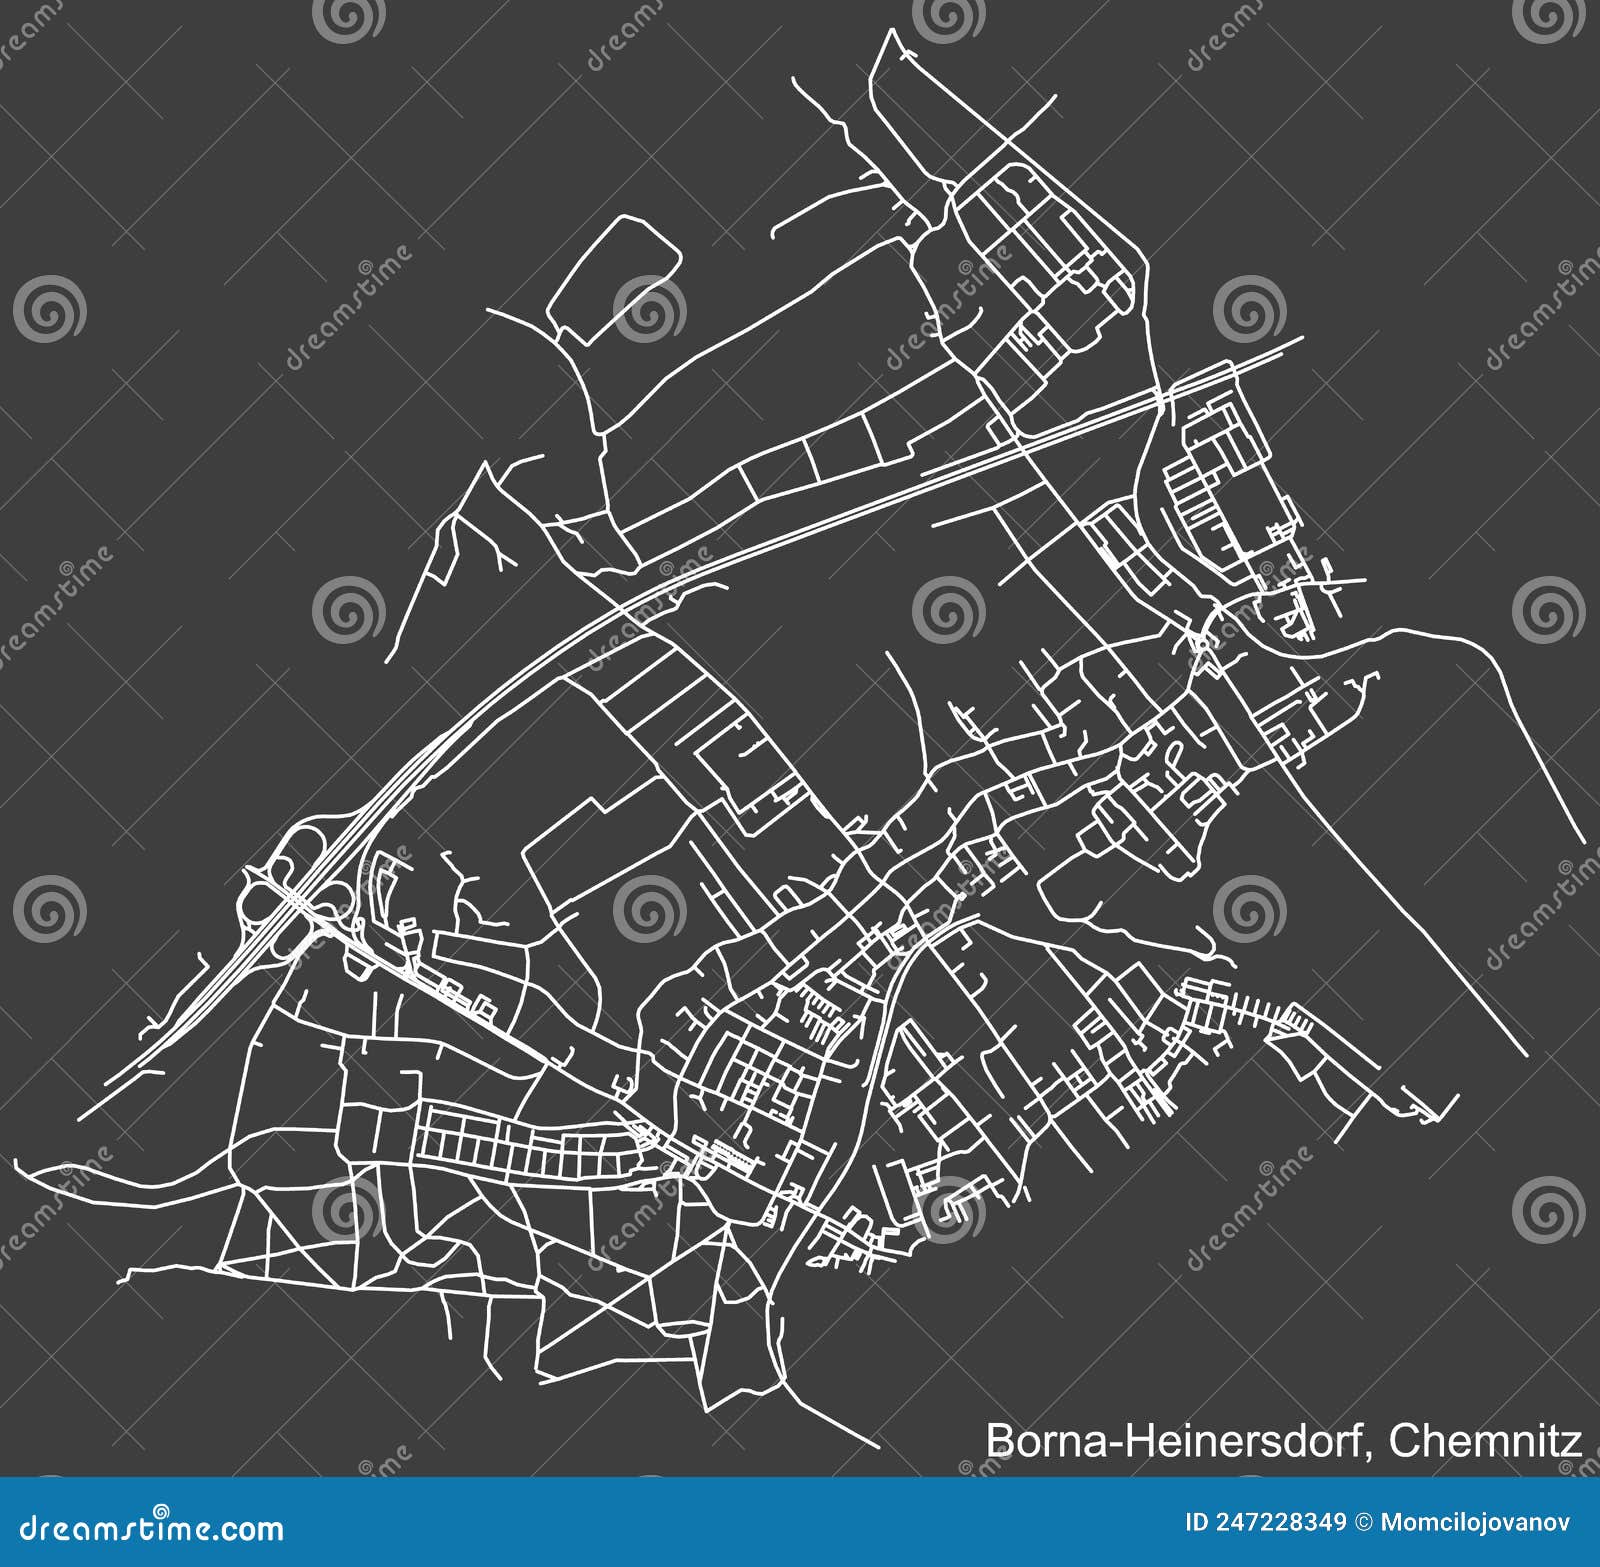 street roads map of the borna-heinersdorf district, chemnitz